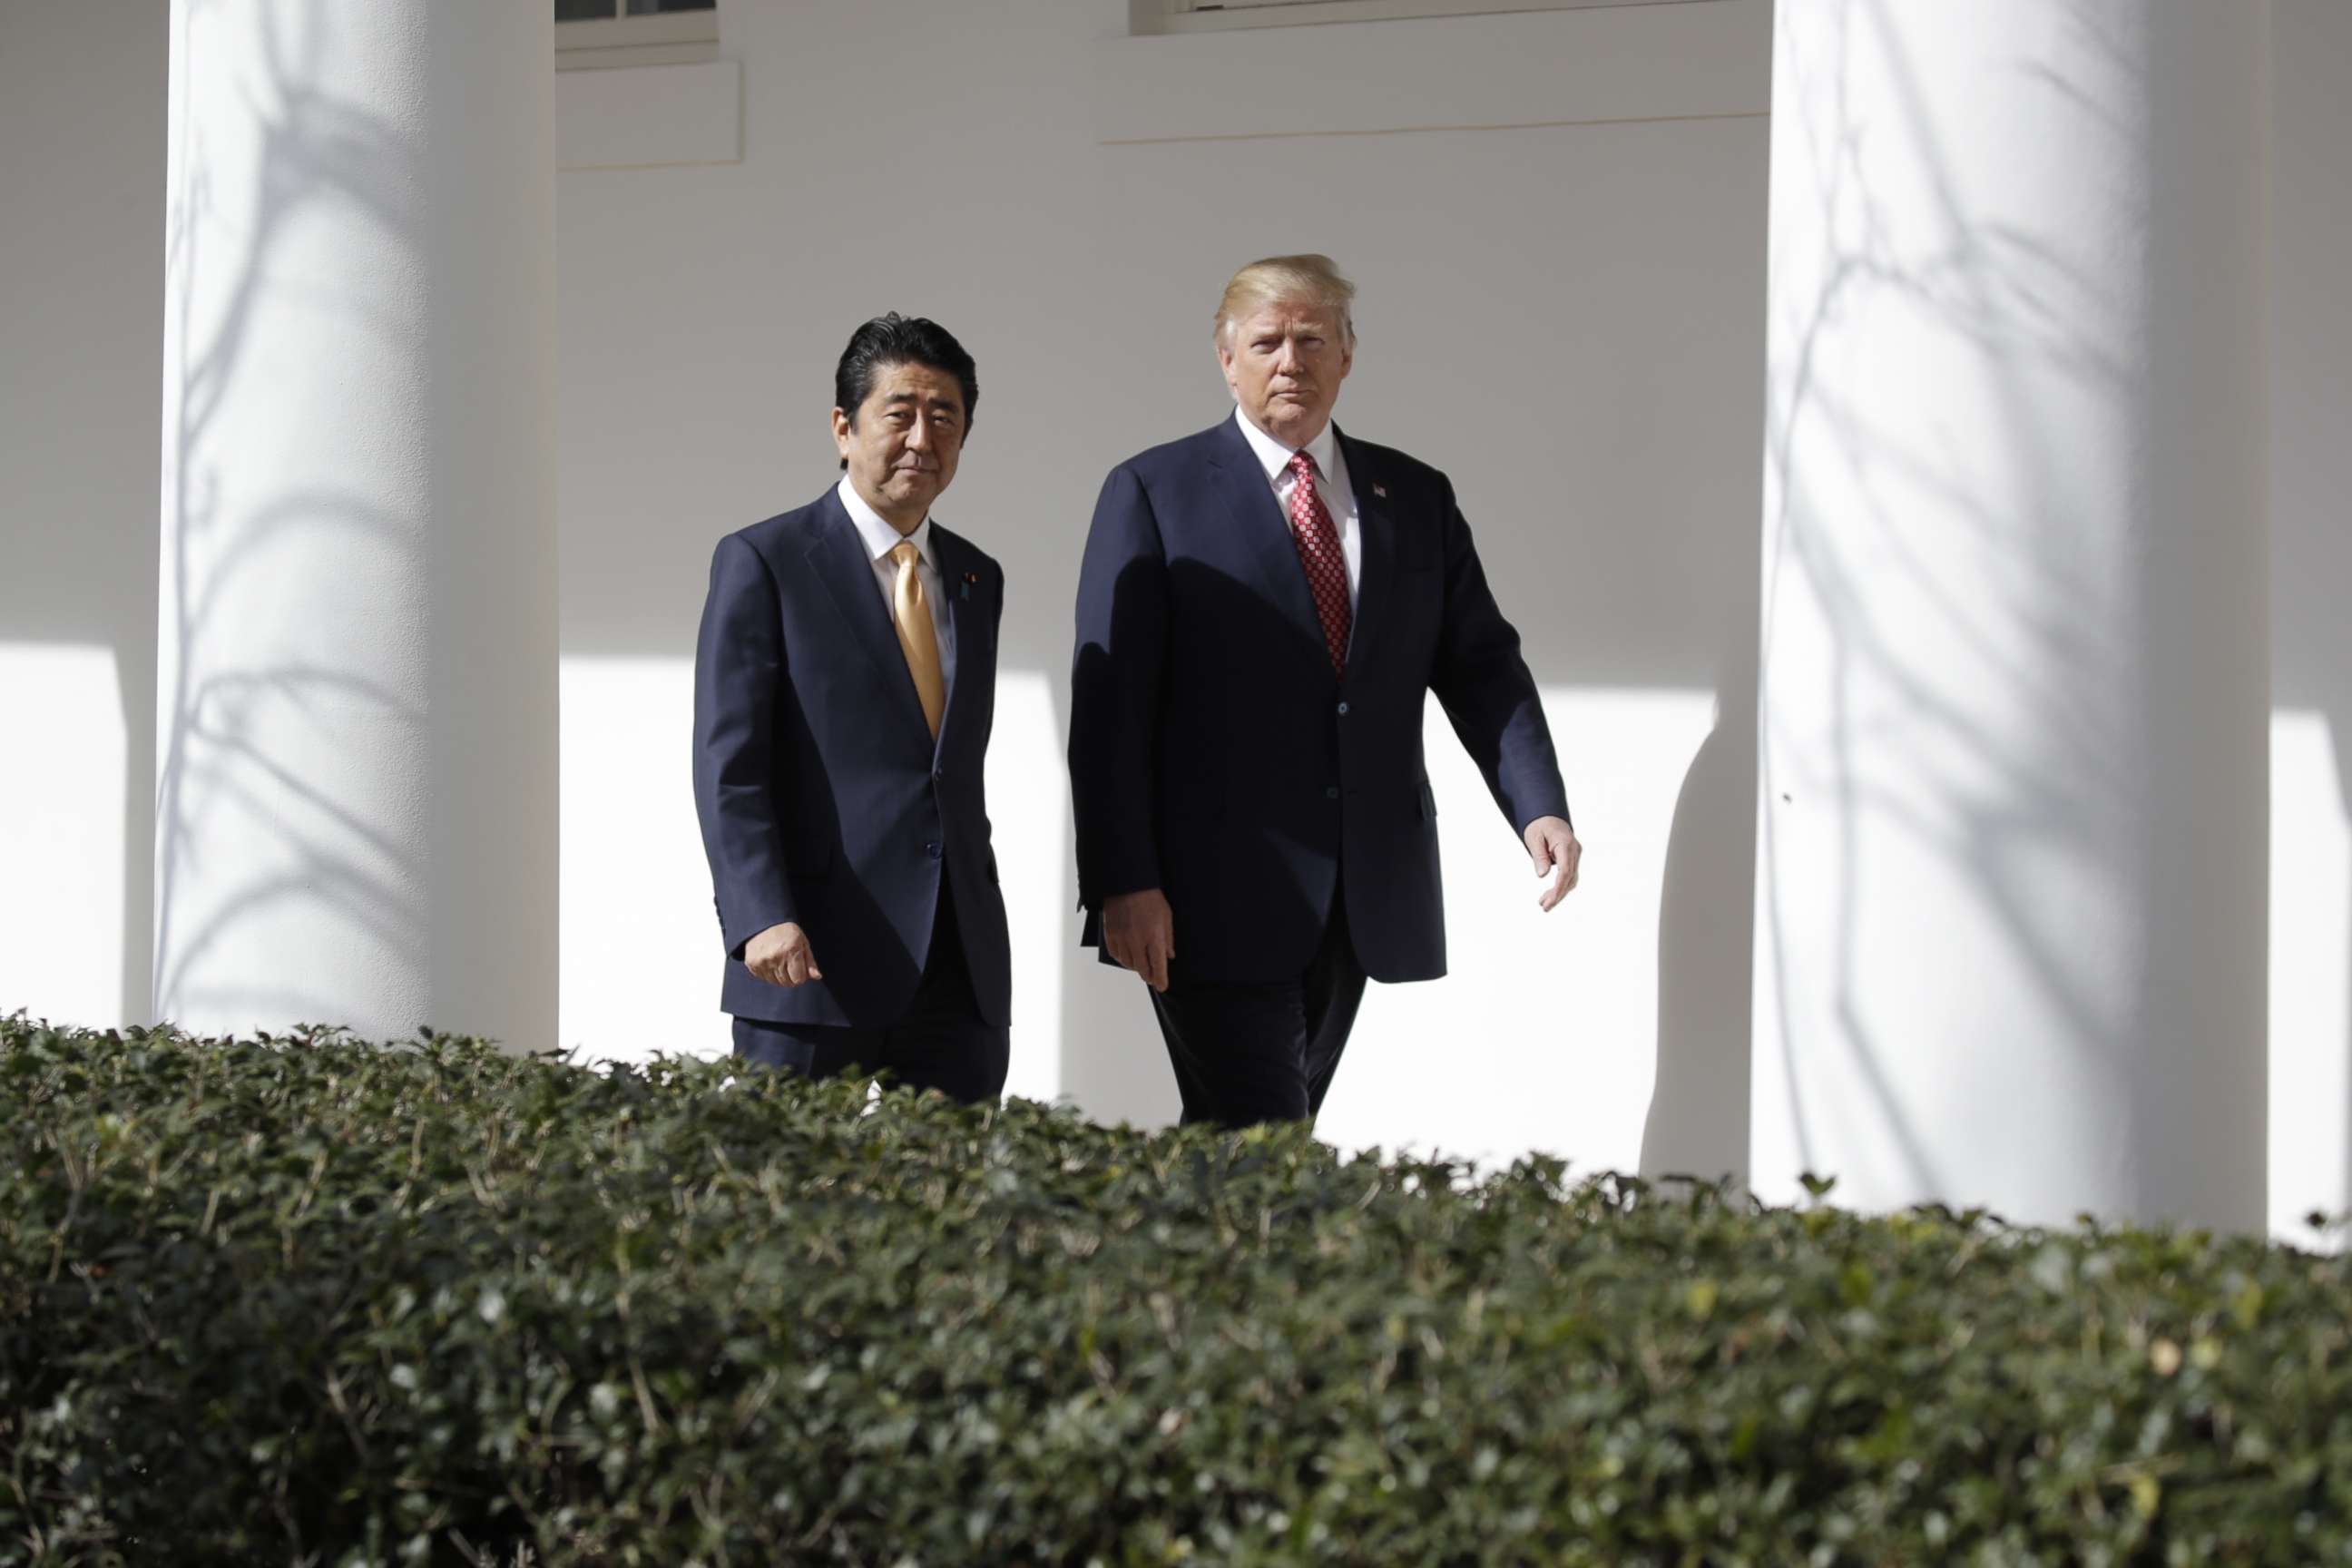 PHOTO: Donald Trump walks with Japanese Prime Minister Shinzo Abe at the White House in Washington, Feb. 10, 2017.